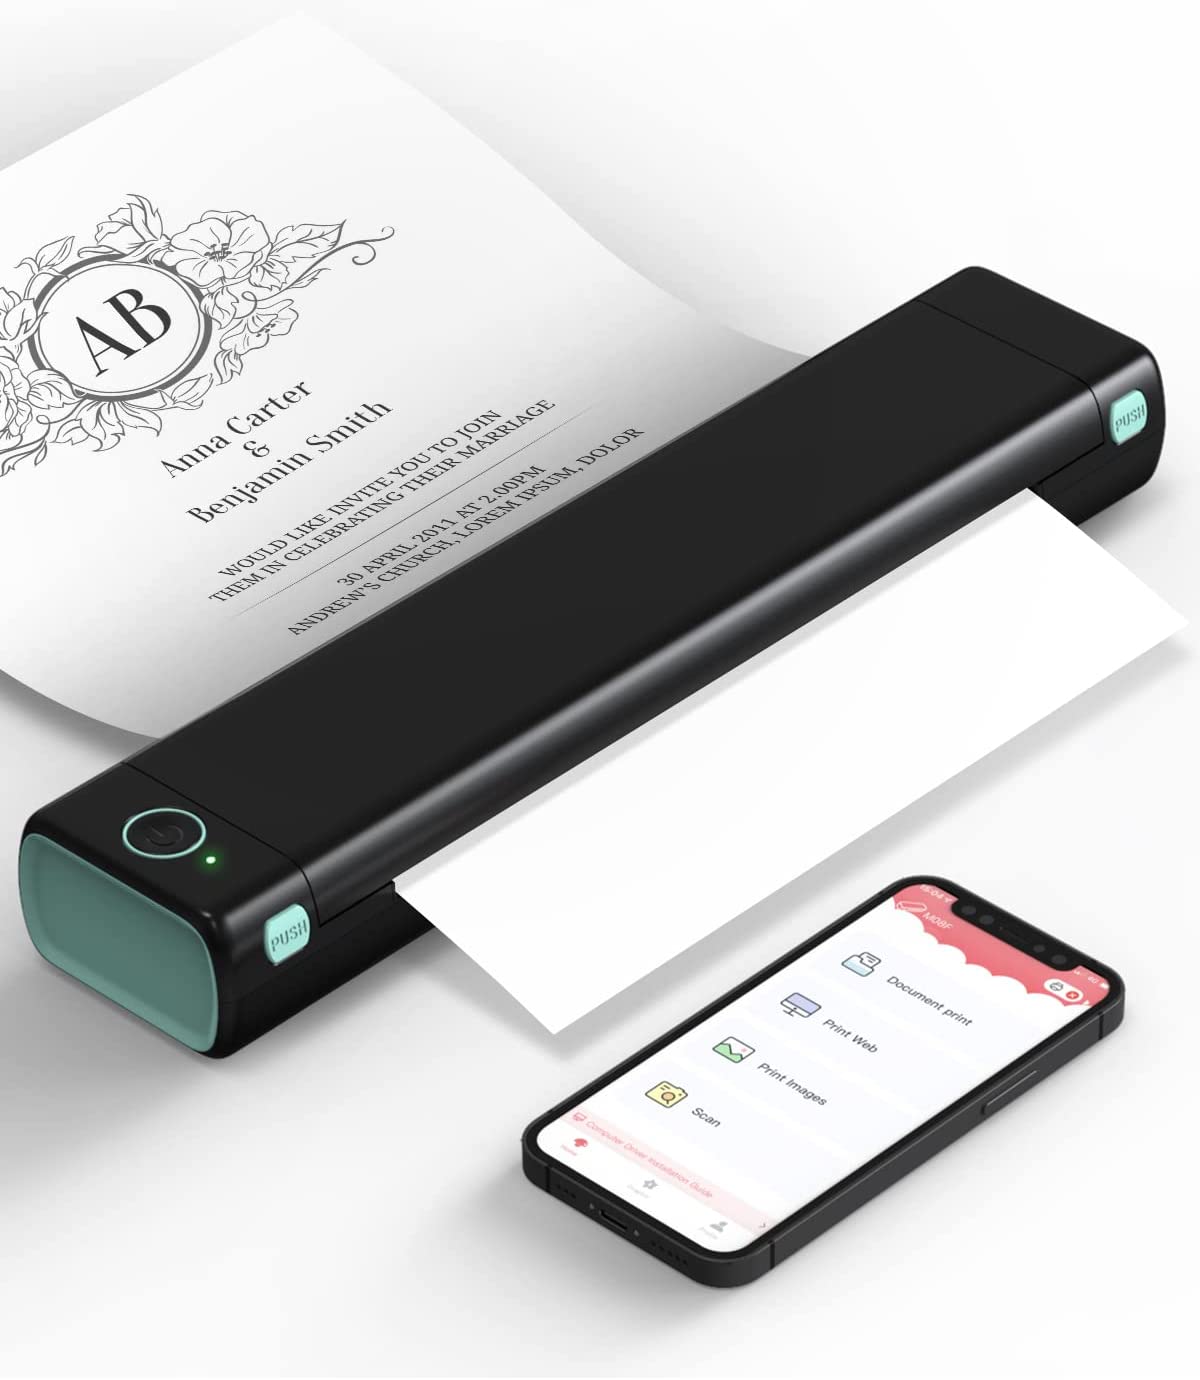 Phomemo Portable Printer Wireless for Travel, [New] [...]